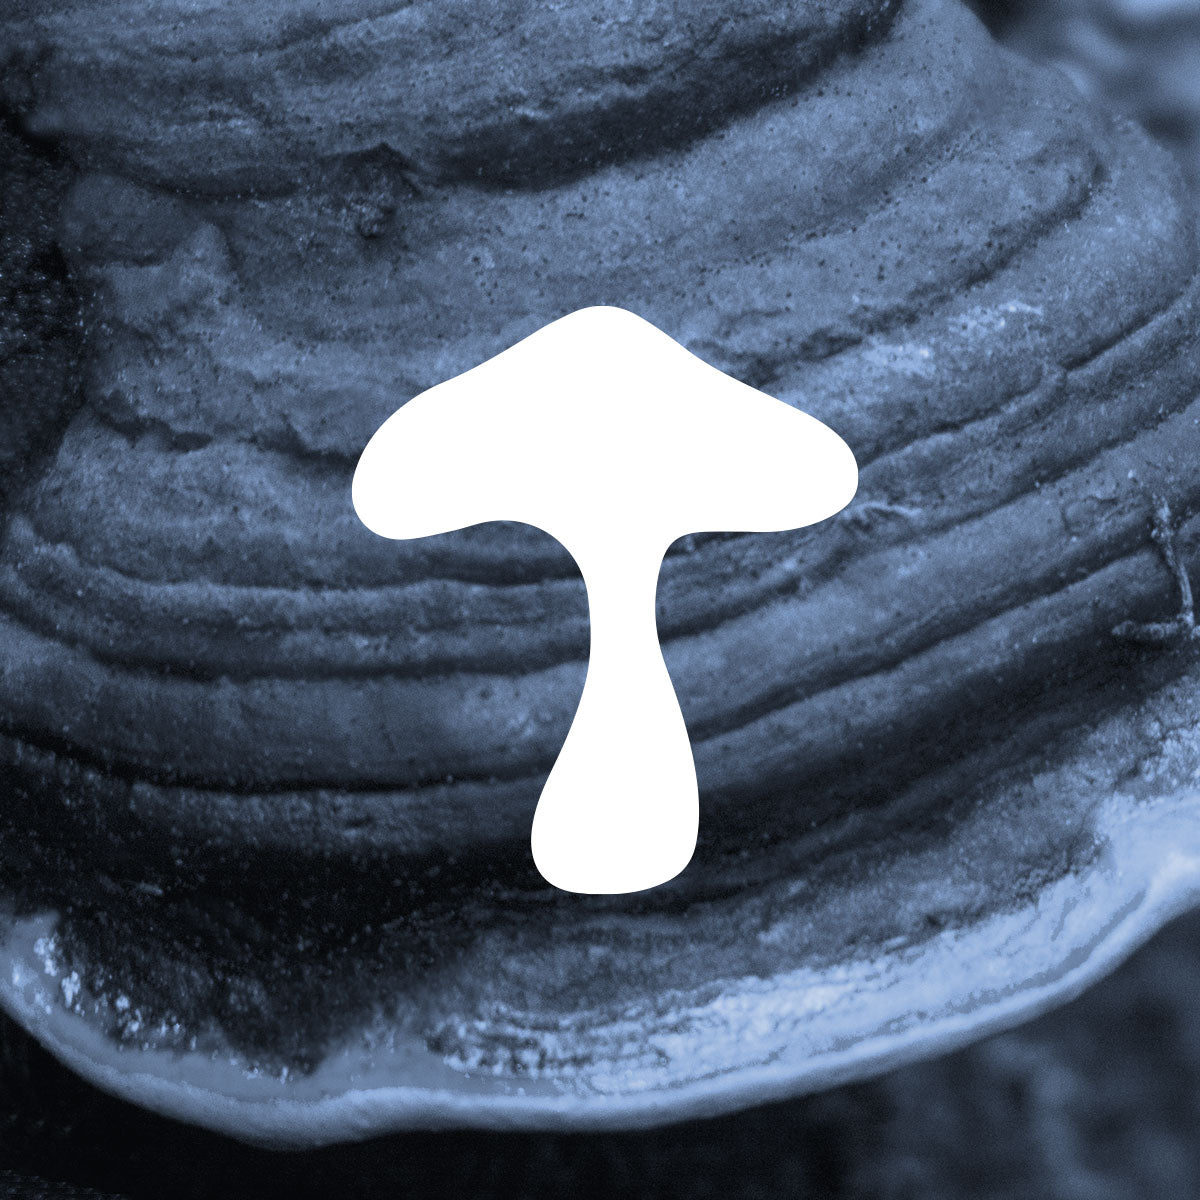 Clover chaga mushroom illustration shown with photo of a mushroom